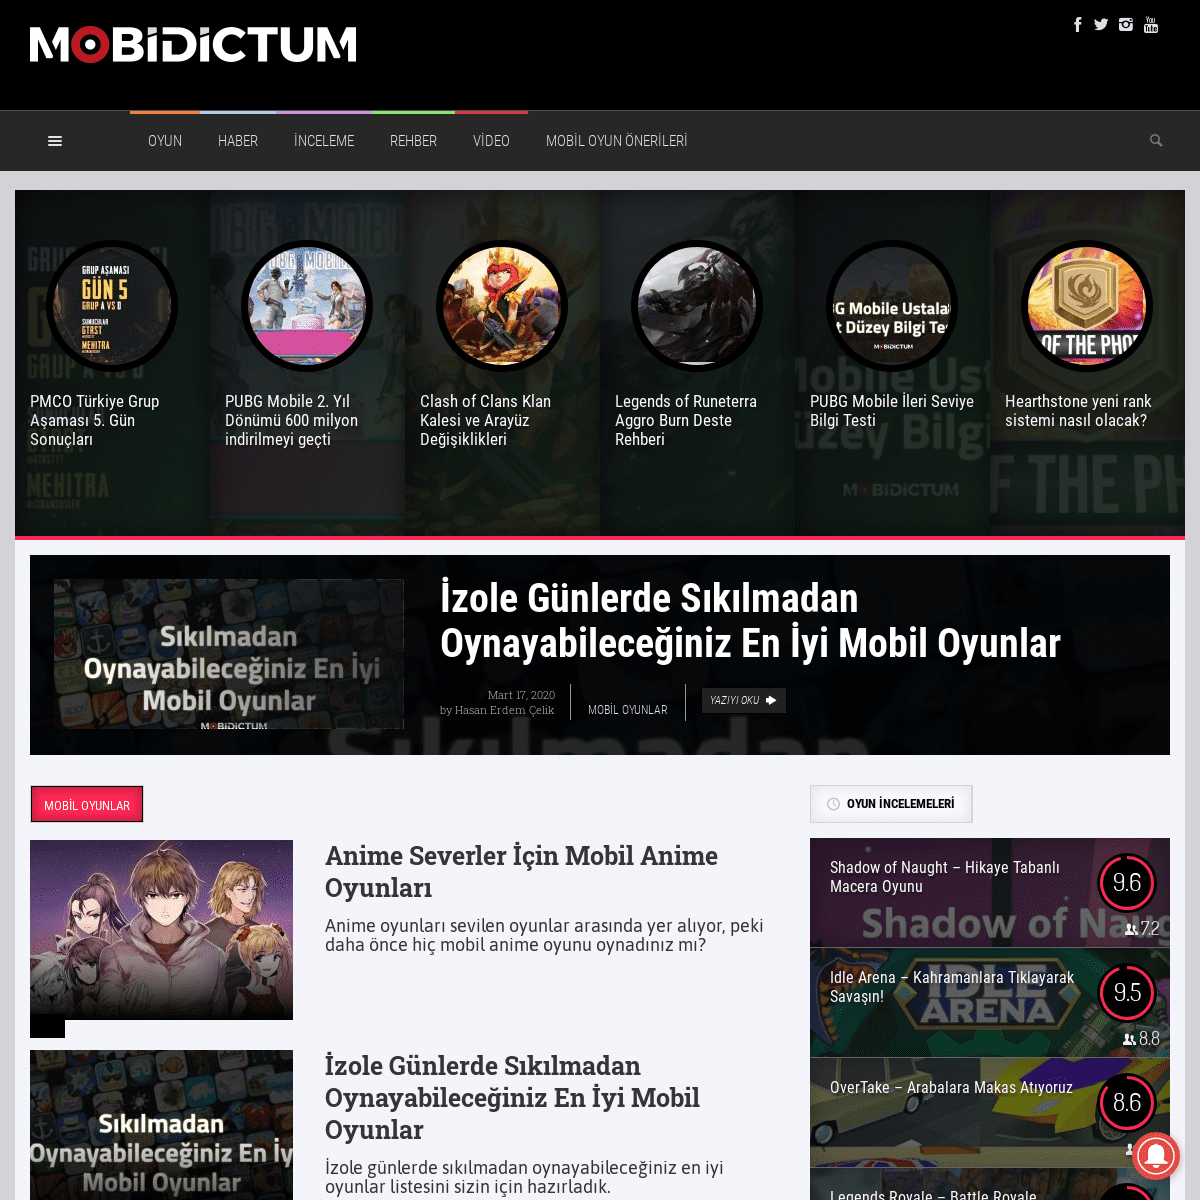 A complete backup of mobidictum.com